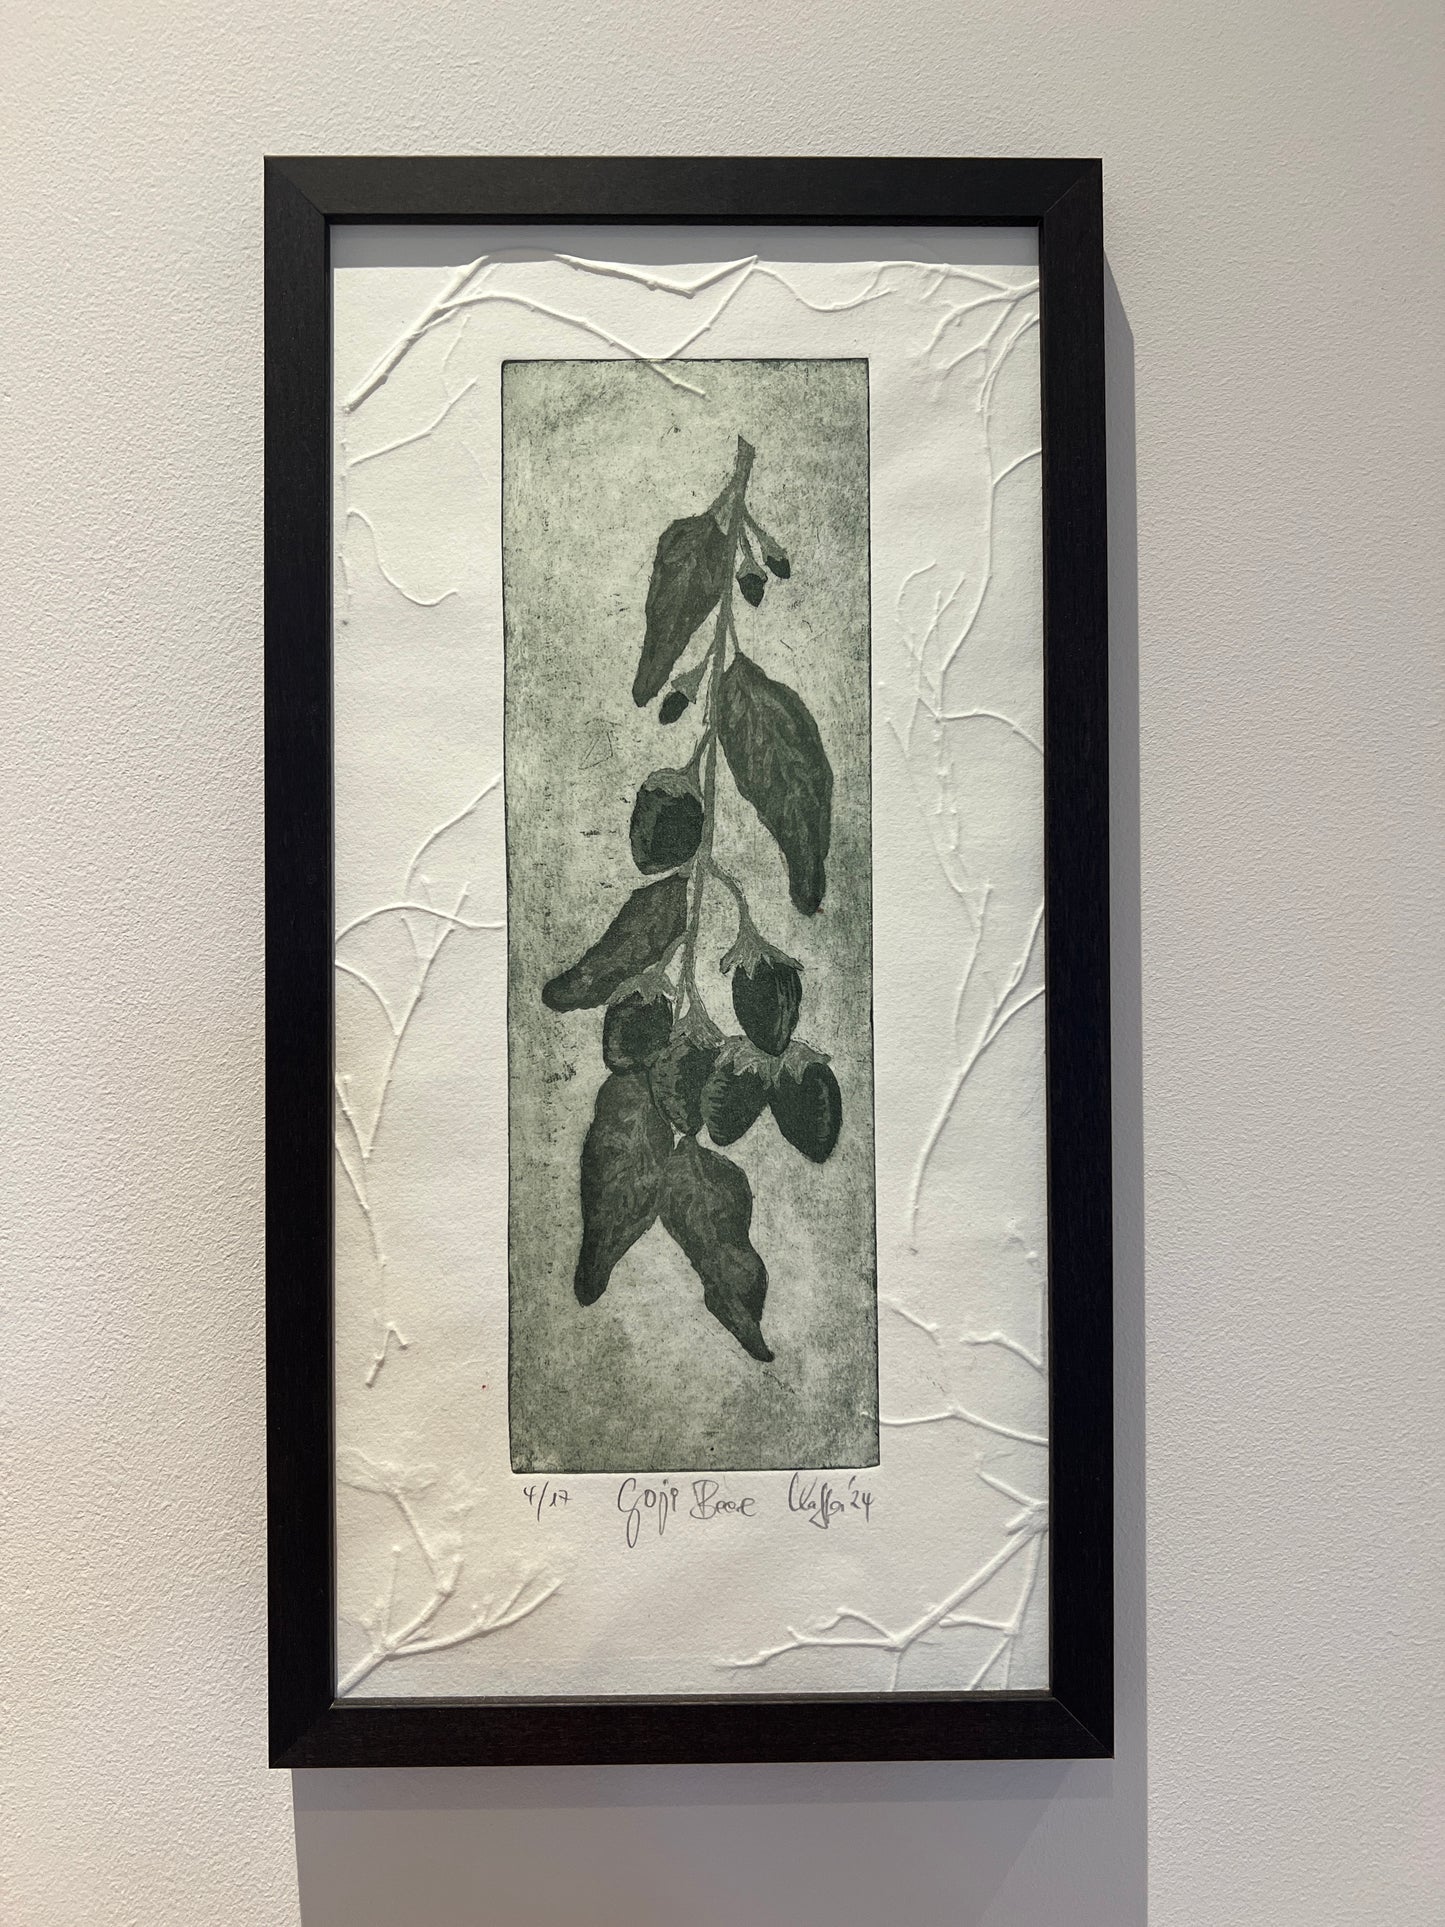 GOJI BERRY Originaldruckgrafik Radierung Aquatinta mit Prägung im Rahmen 20x40 cm